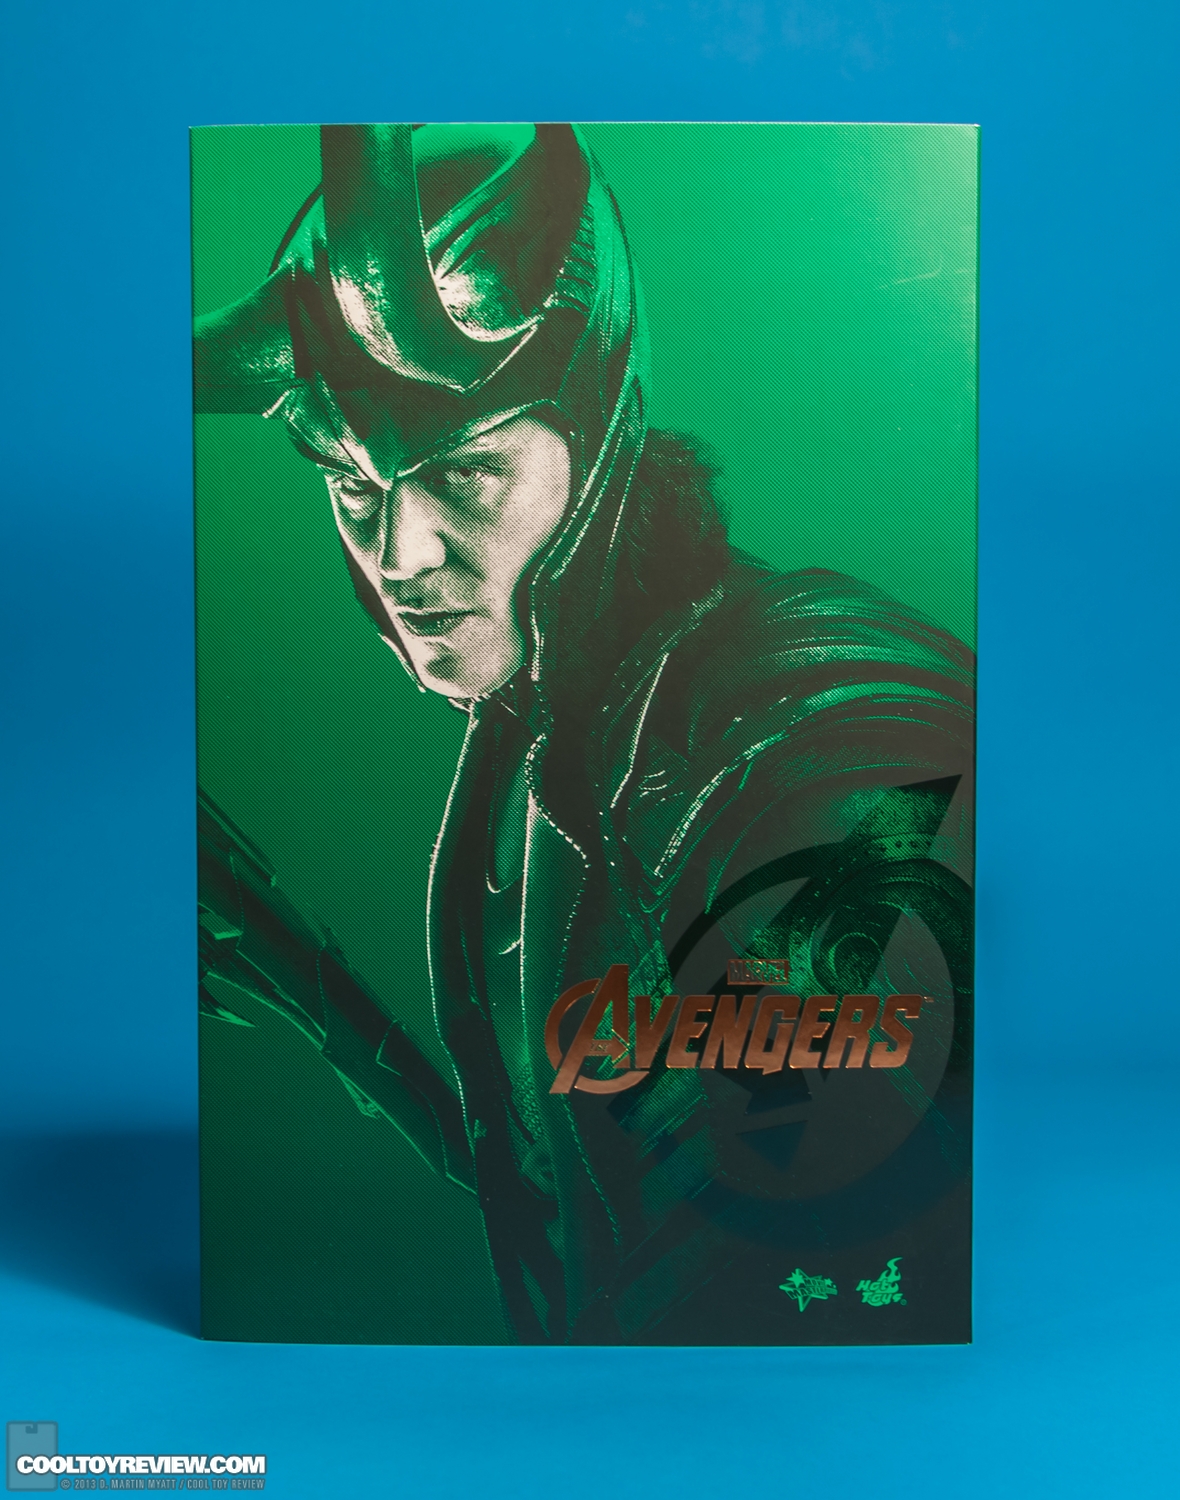 Loki-Avengers-Movie-Masterpiece-Series-Hot-Toys-030.jpg